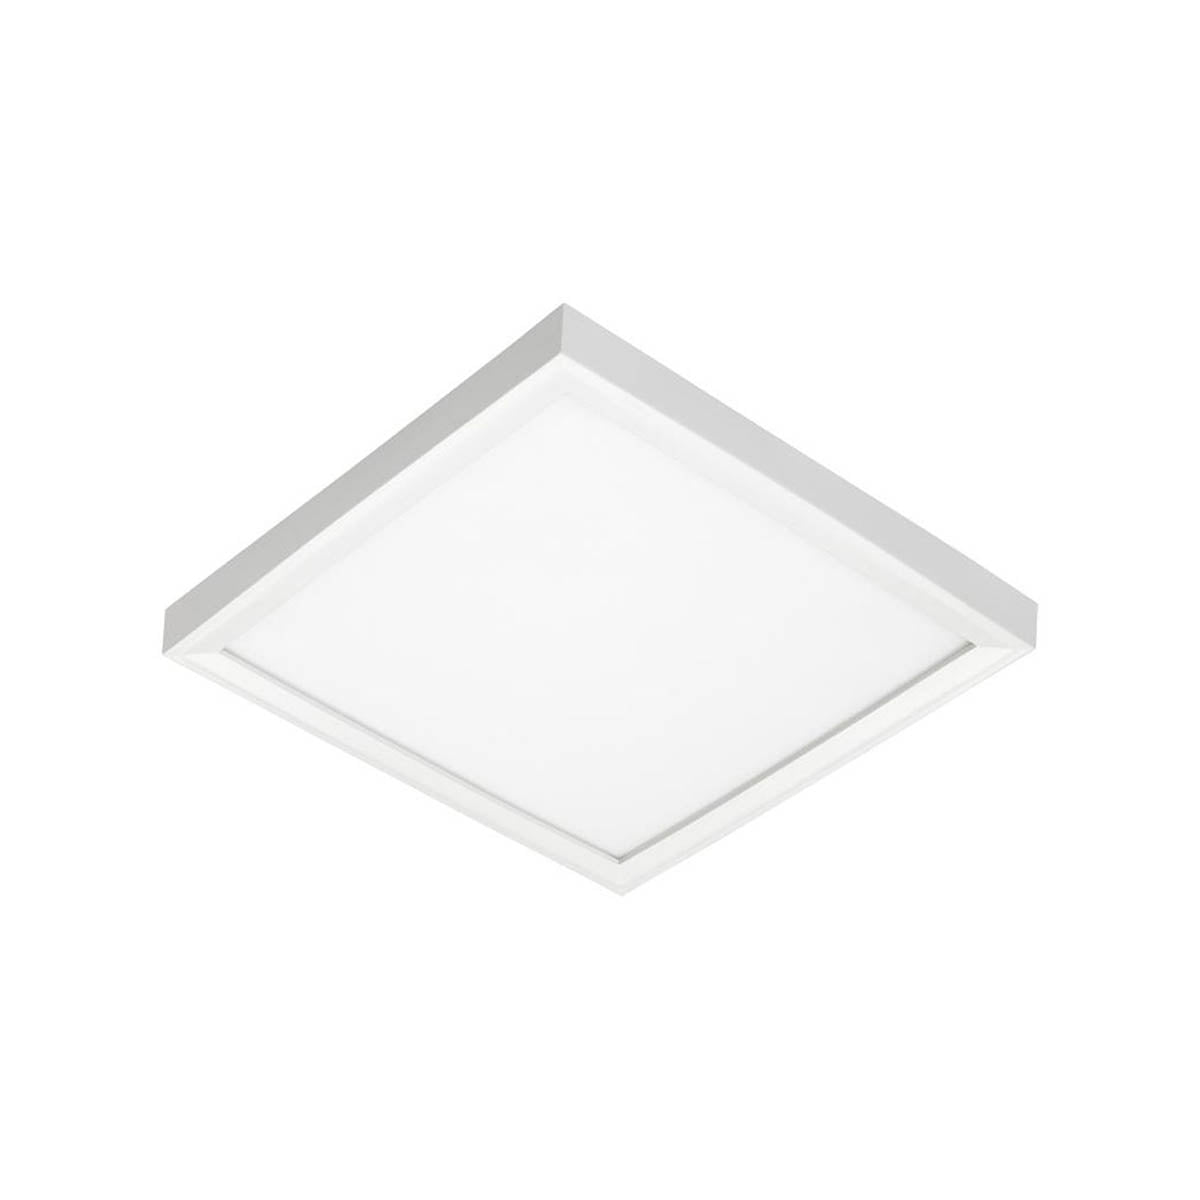 JSFSQ LED Square Disk Light 1300 Lumens 3000K 120-277V White finish